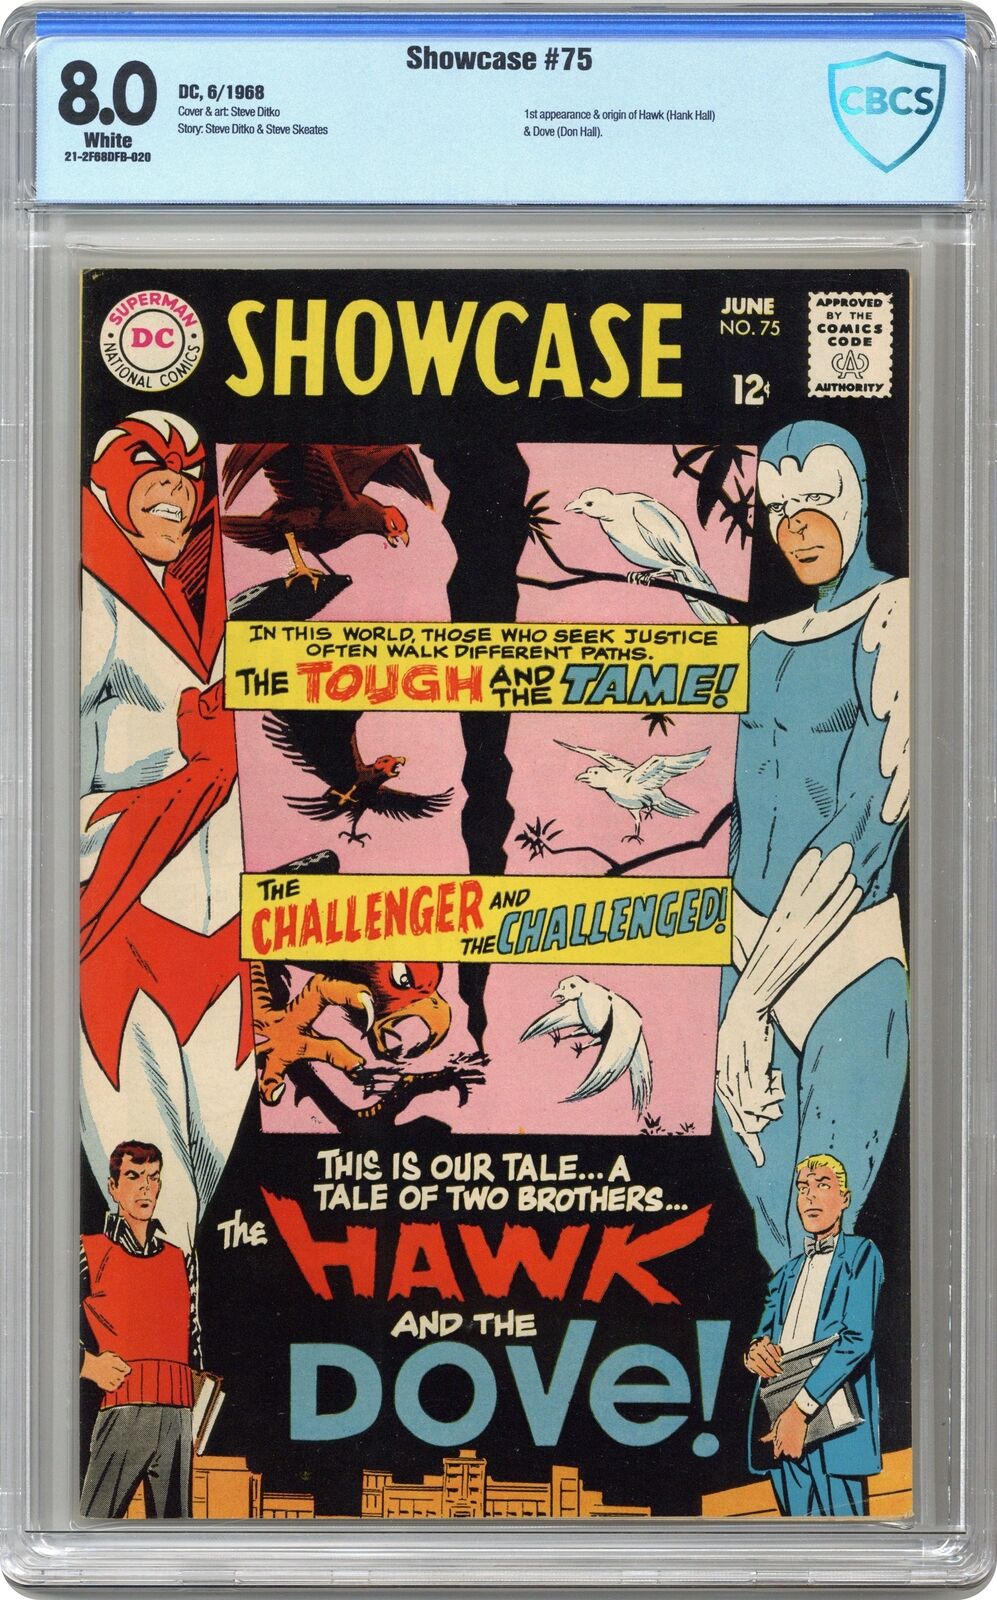 Showcase #75 CBCS 8.0 1968 21-2F68DFB-020 1st app. Hawk and Dove